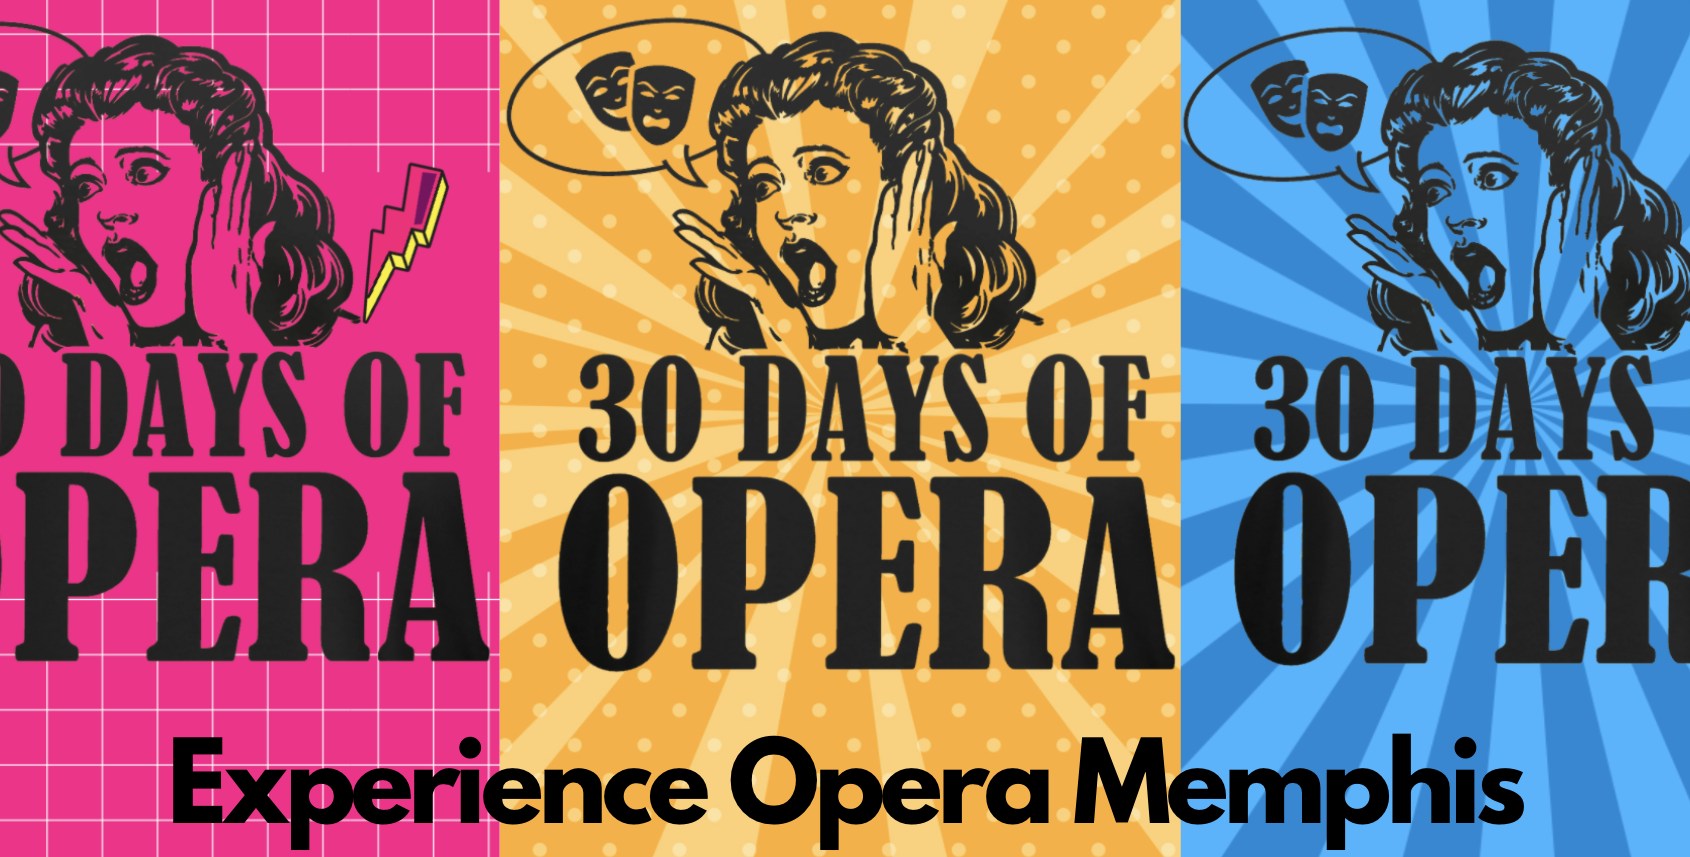 30 Days of Opera - Opera Memphis.png